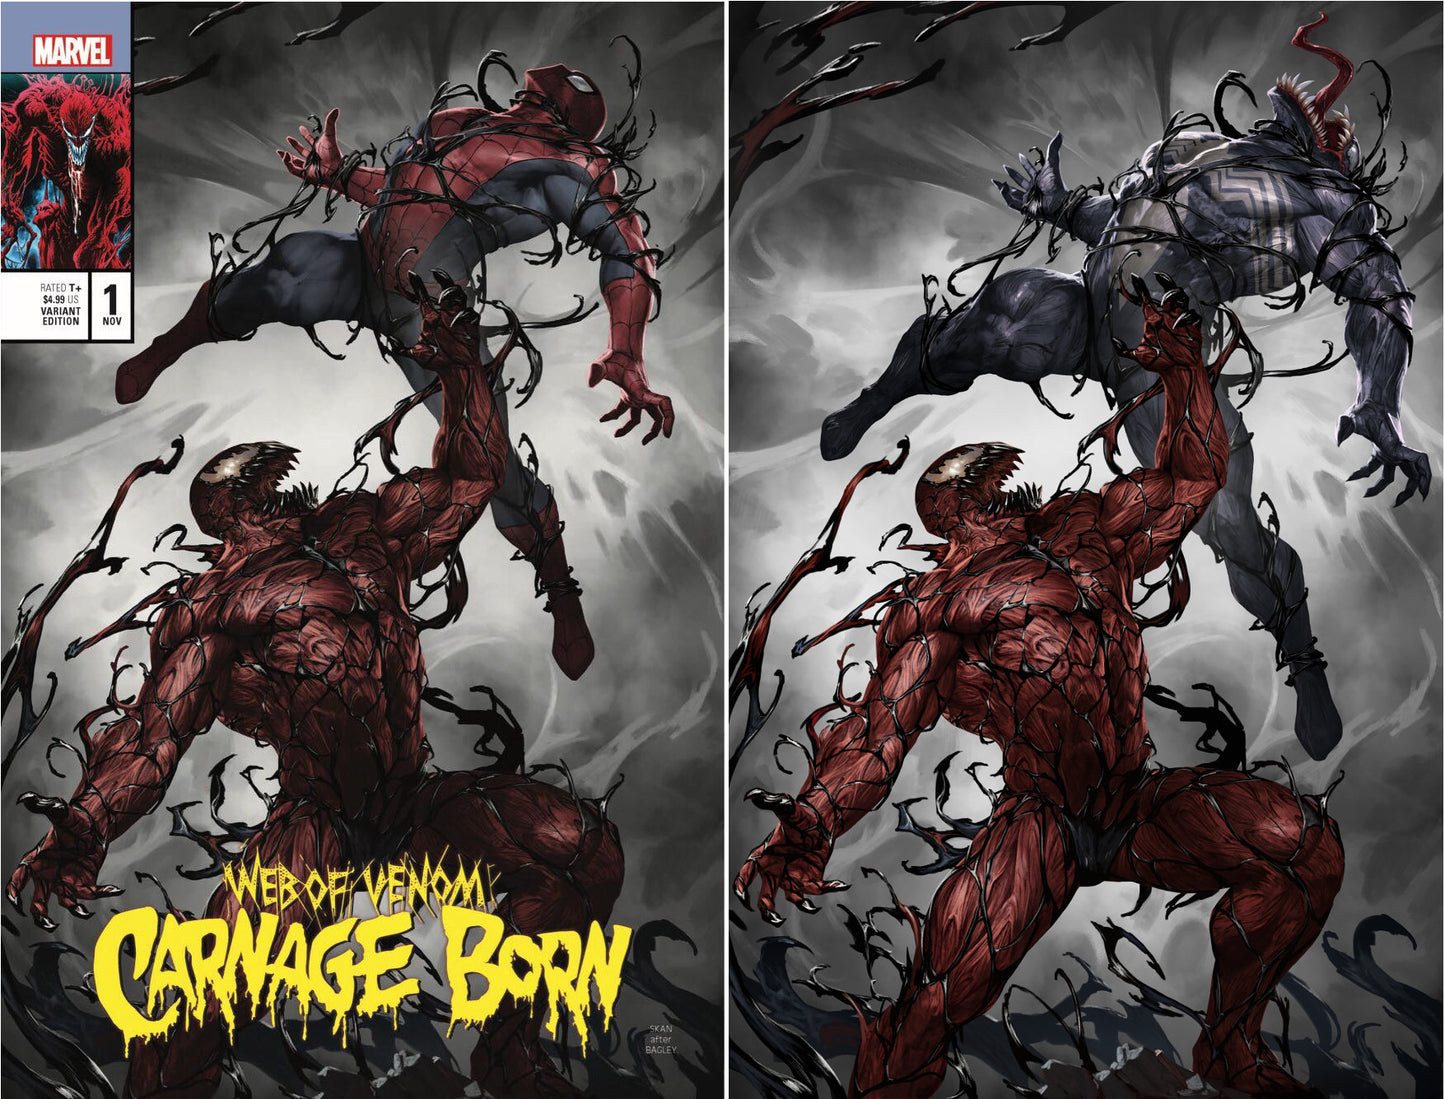 Web Of Venom Carnage Born 1 Skan Srisuwan Amazing Spider-Man 361 Homage Variant (11/21/2018)